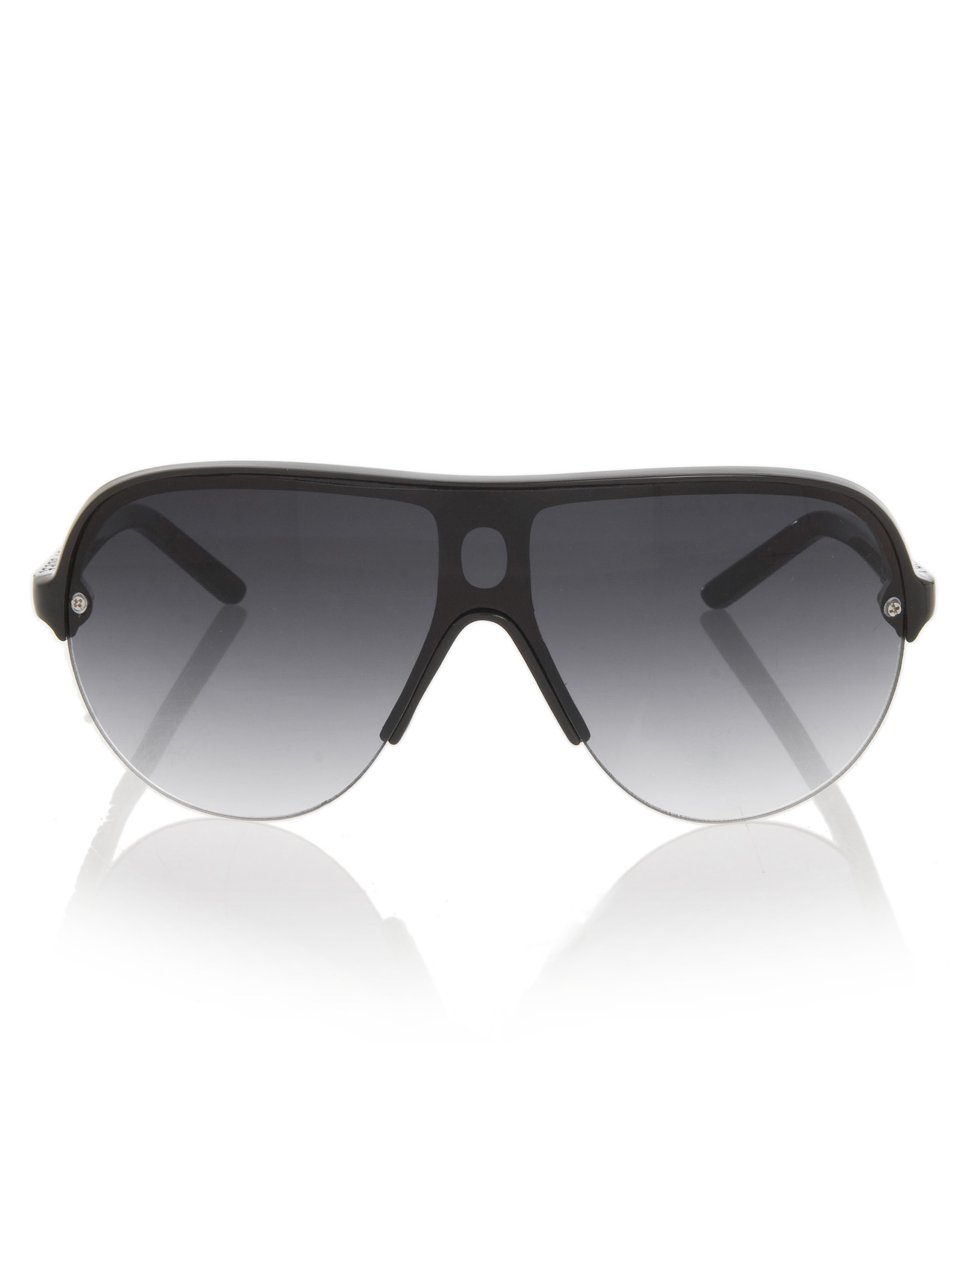 G By Guess Men's Shield Metal Aviator Sunglasses